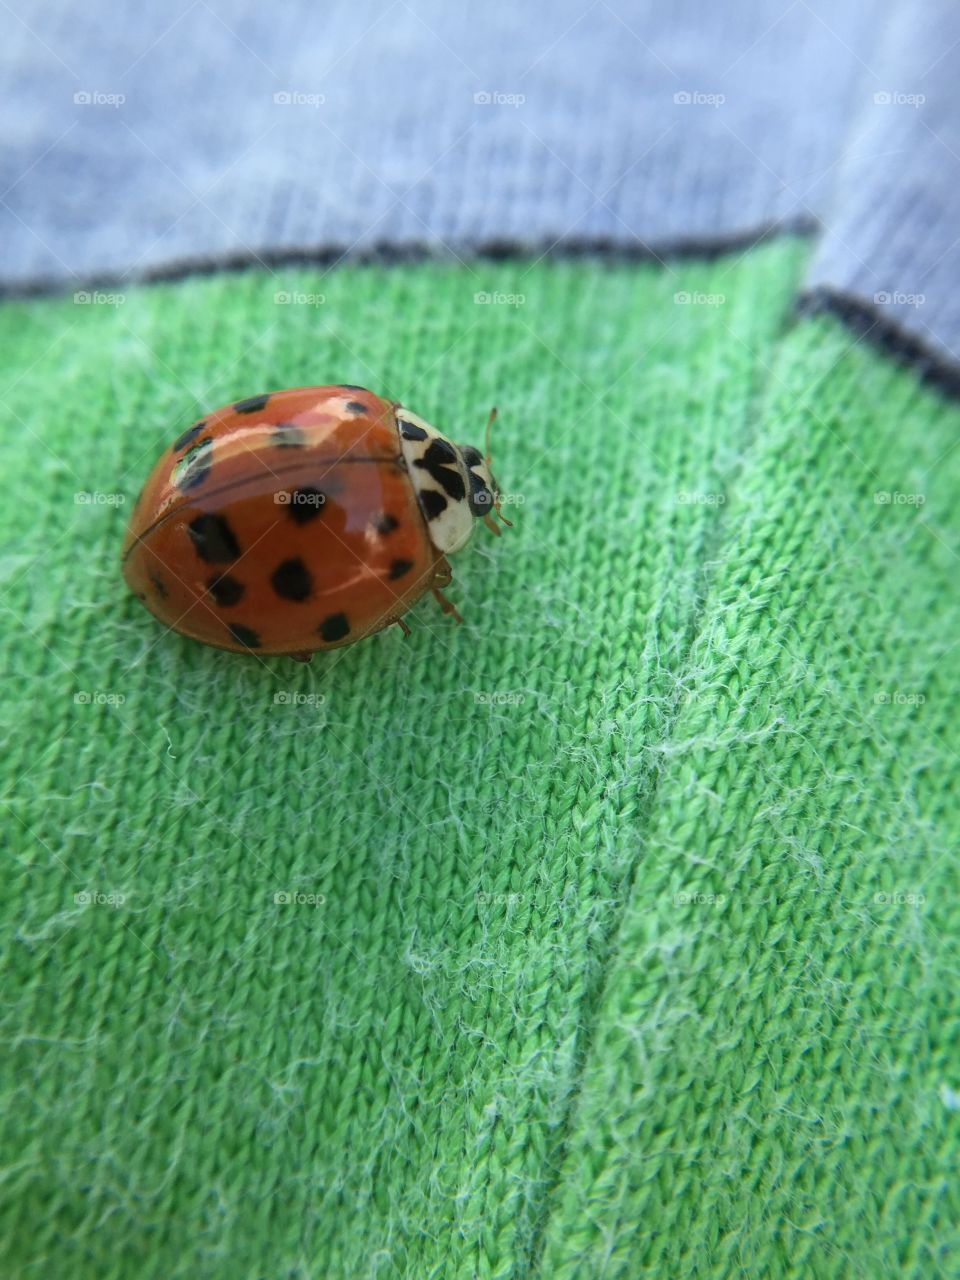 Ladybird on sleeve. This little fellow just landed on my sleeve. 